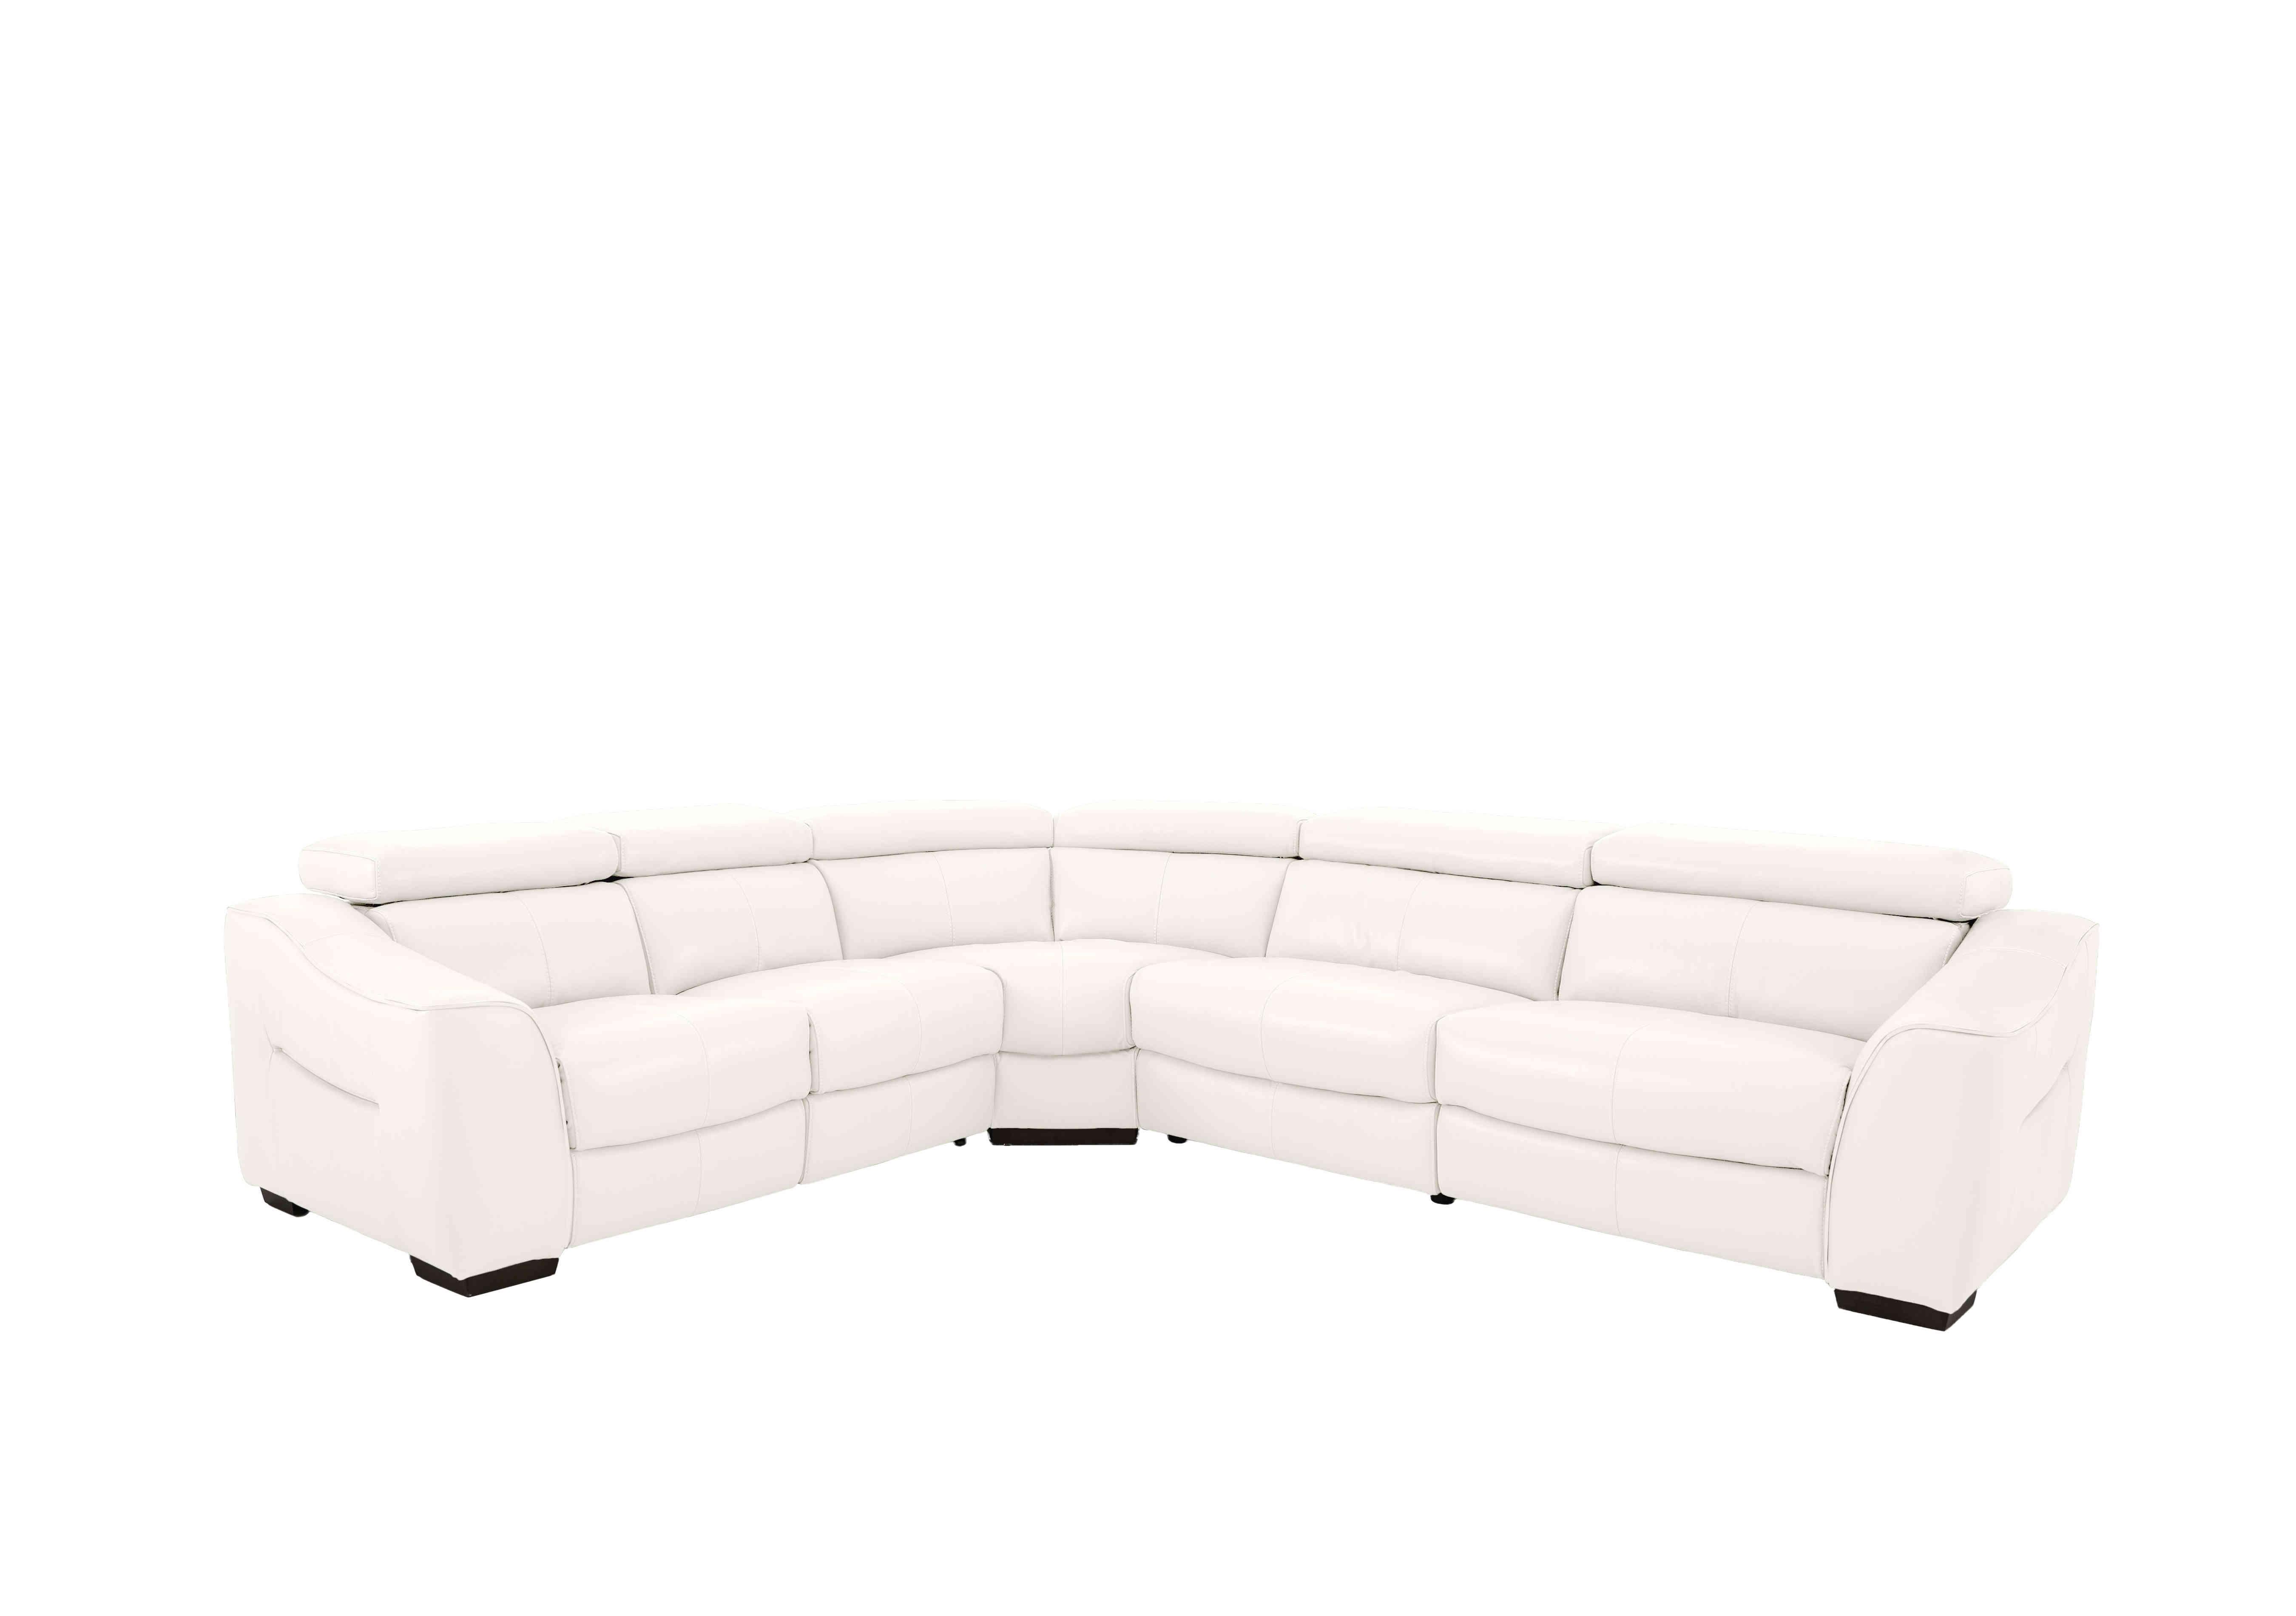 Elixir Leather Power Recliner Corner Sofa in Bv-744d Star White on Furniture Village